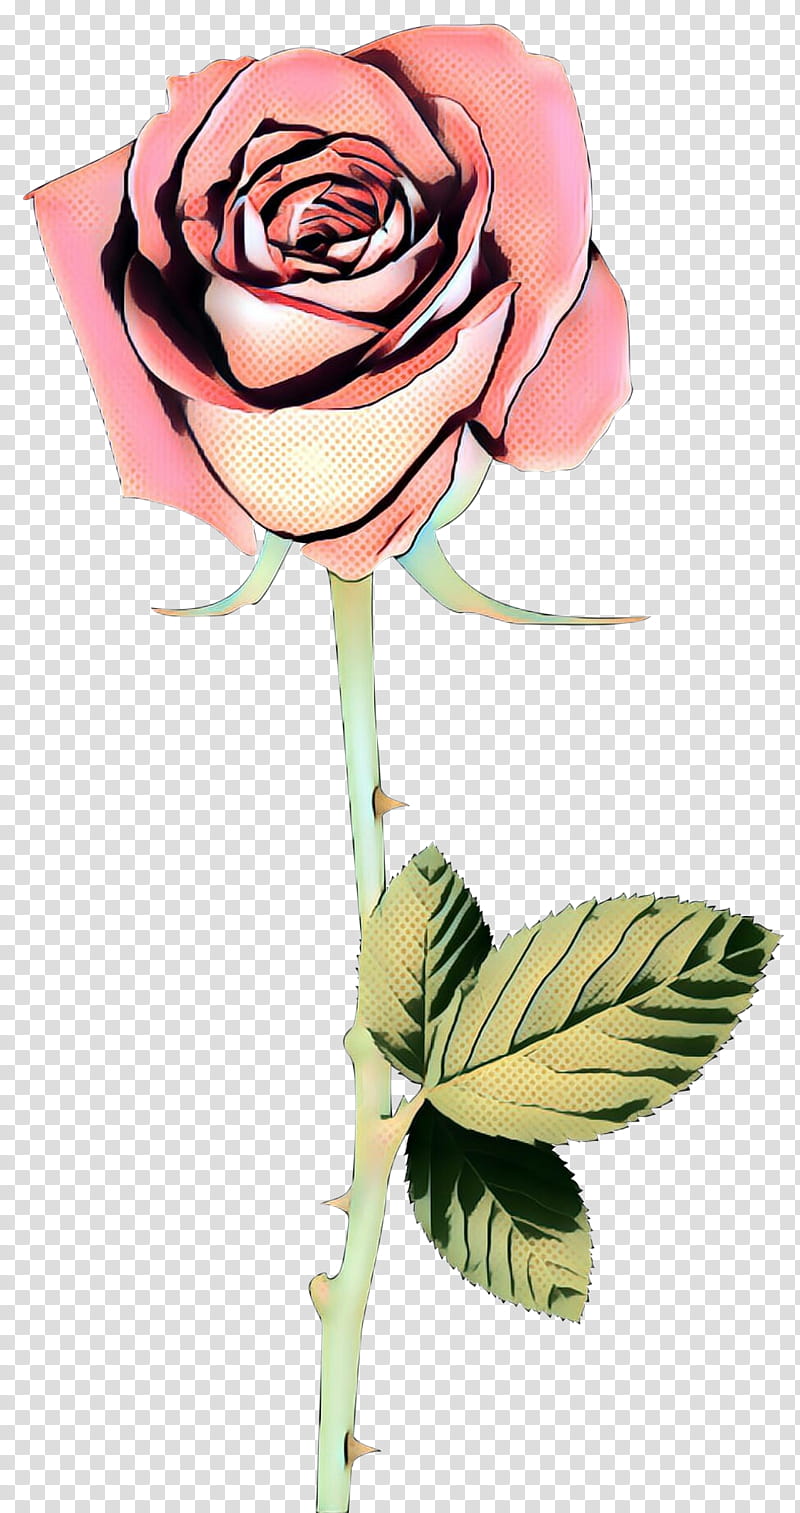 Garden roses, Pop Art, Retro, Vintage, Flower, Pink, Rose Family, Cut Flowers transparent background PNG clipart